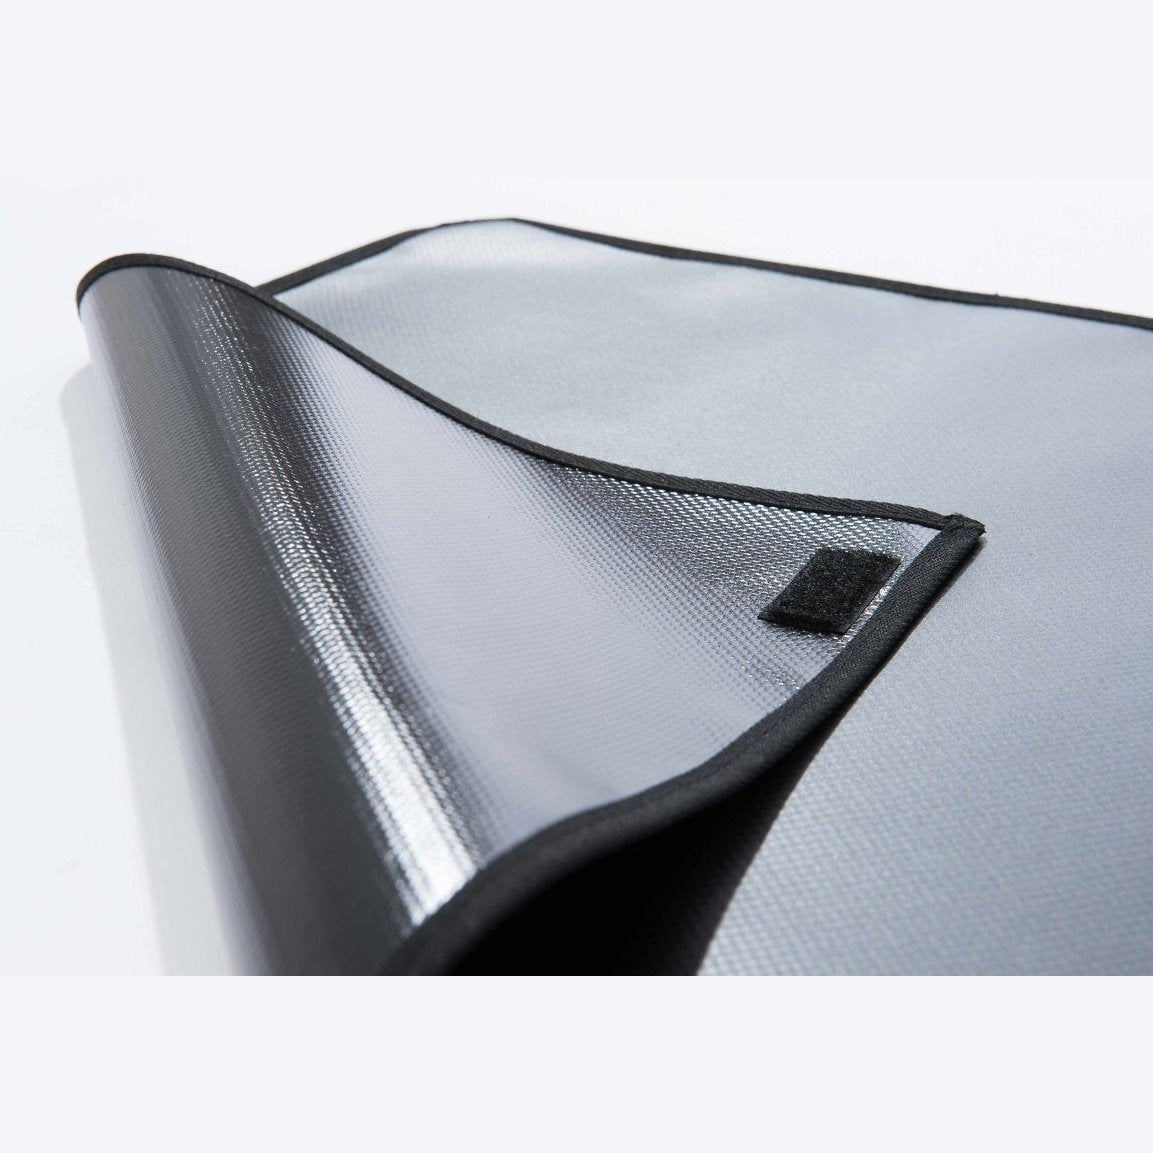 Durable Custom Leder Kofferraum Matte für Mercedes Benz E Klasse